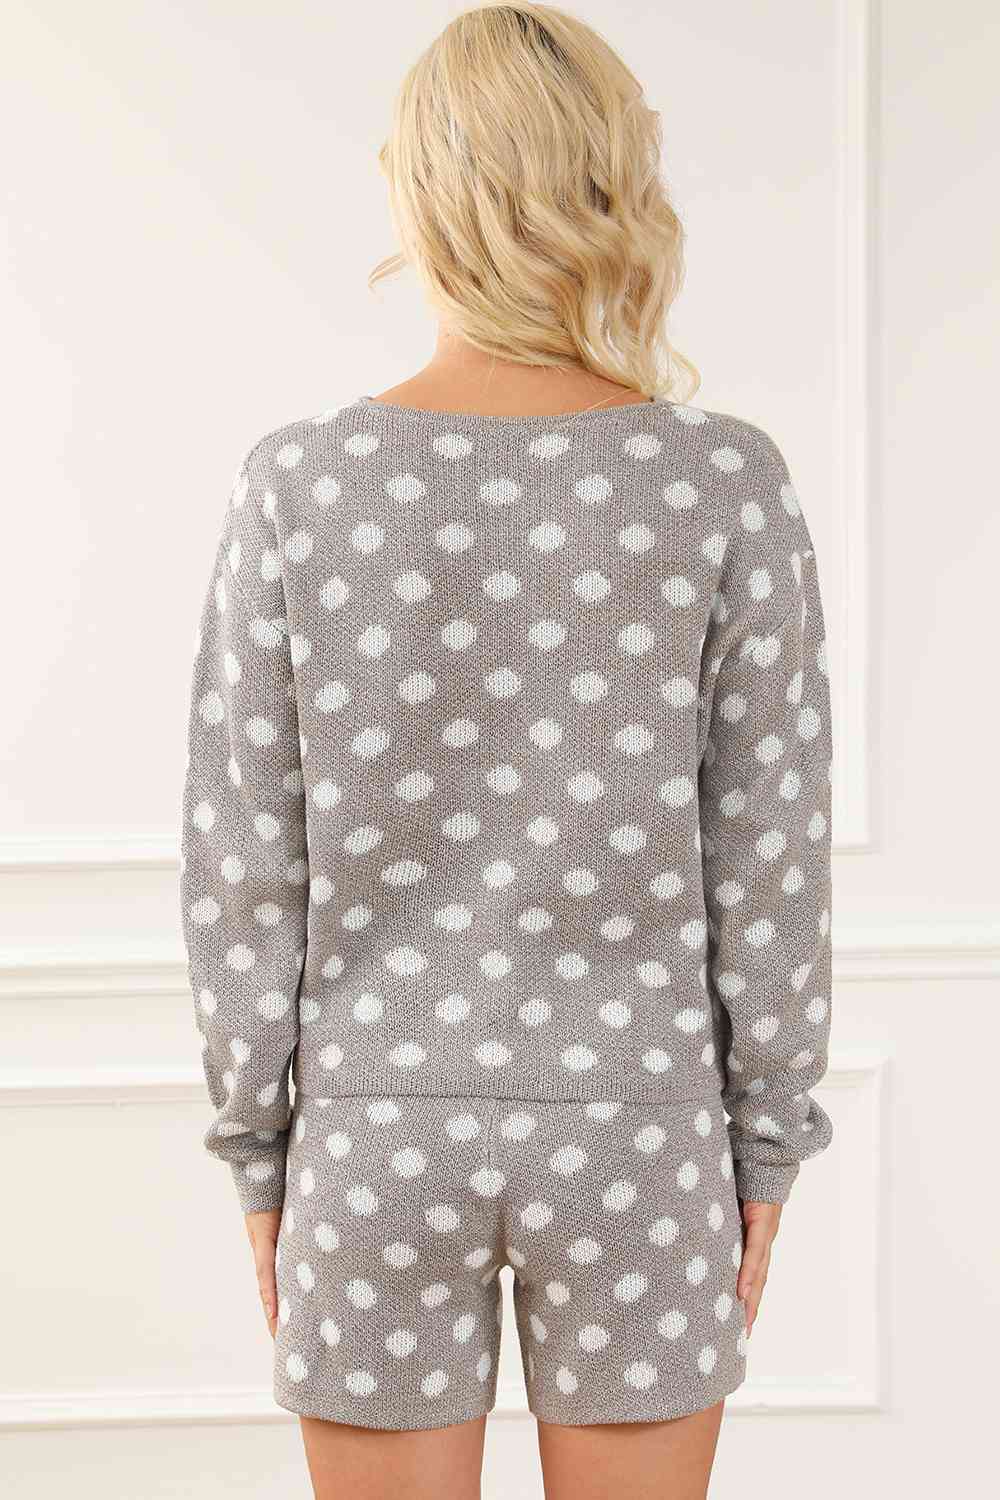 Light Gray Polka Dot Notched Neck Top and Shorts Set Sentient Beauty Fashions Sleepwear